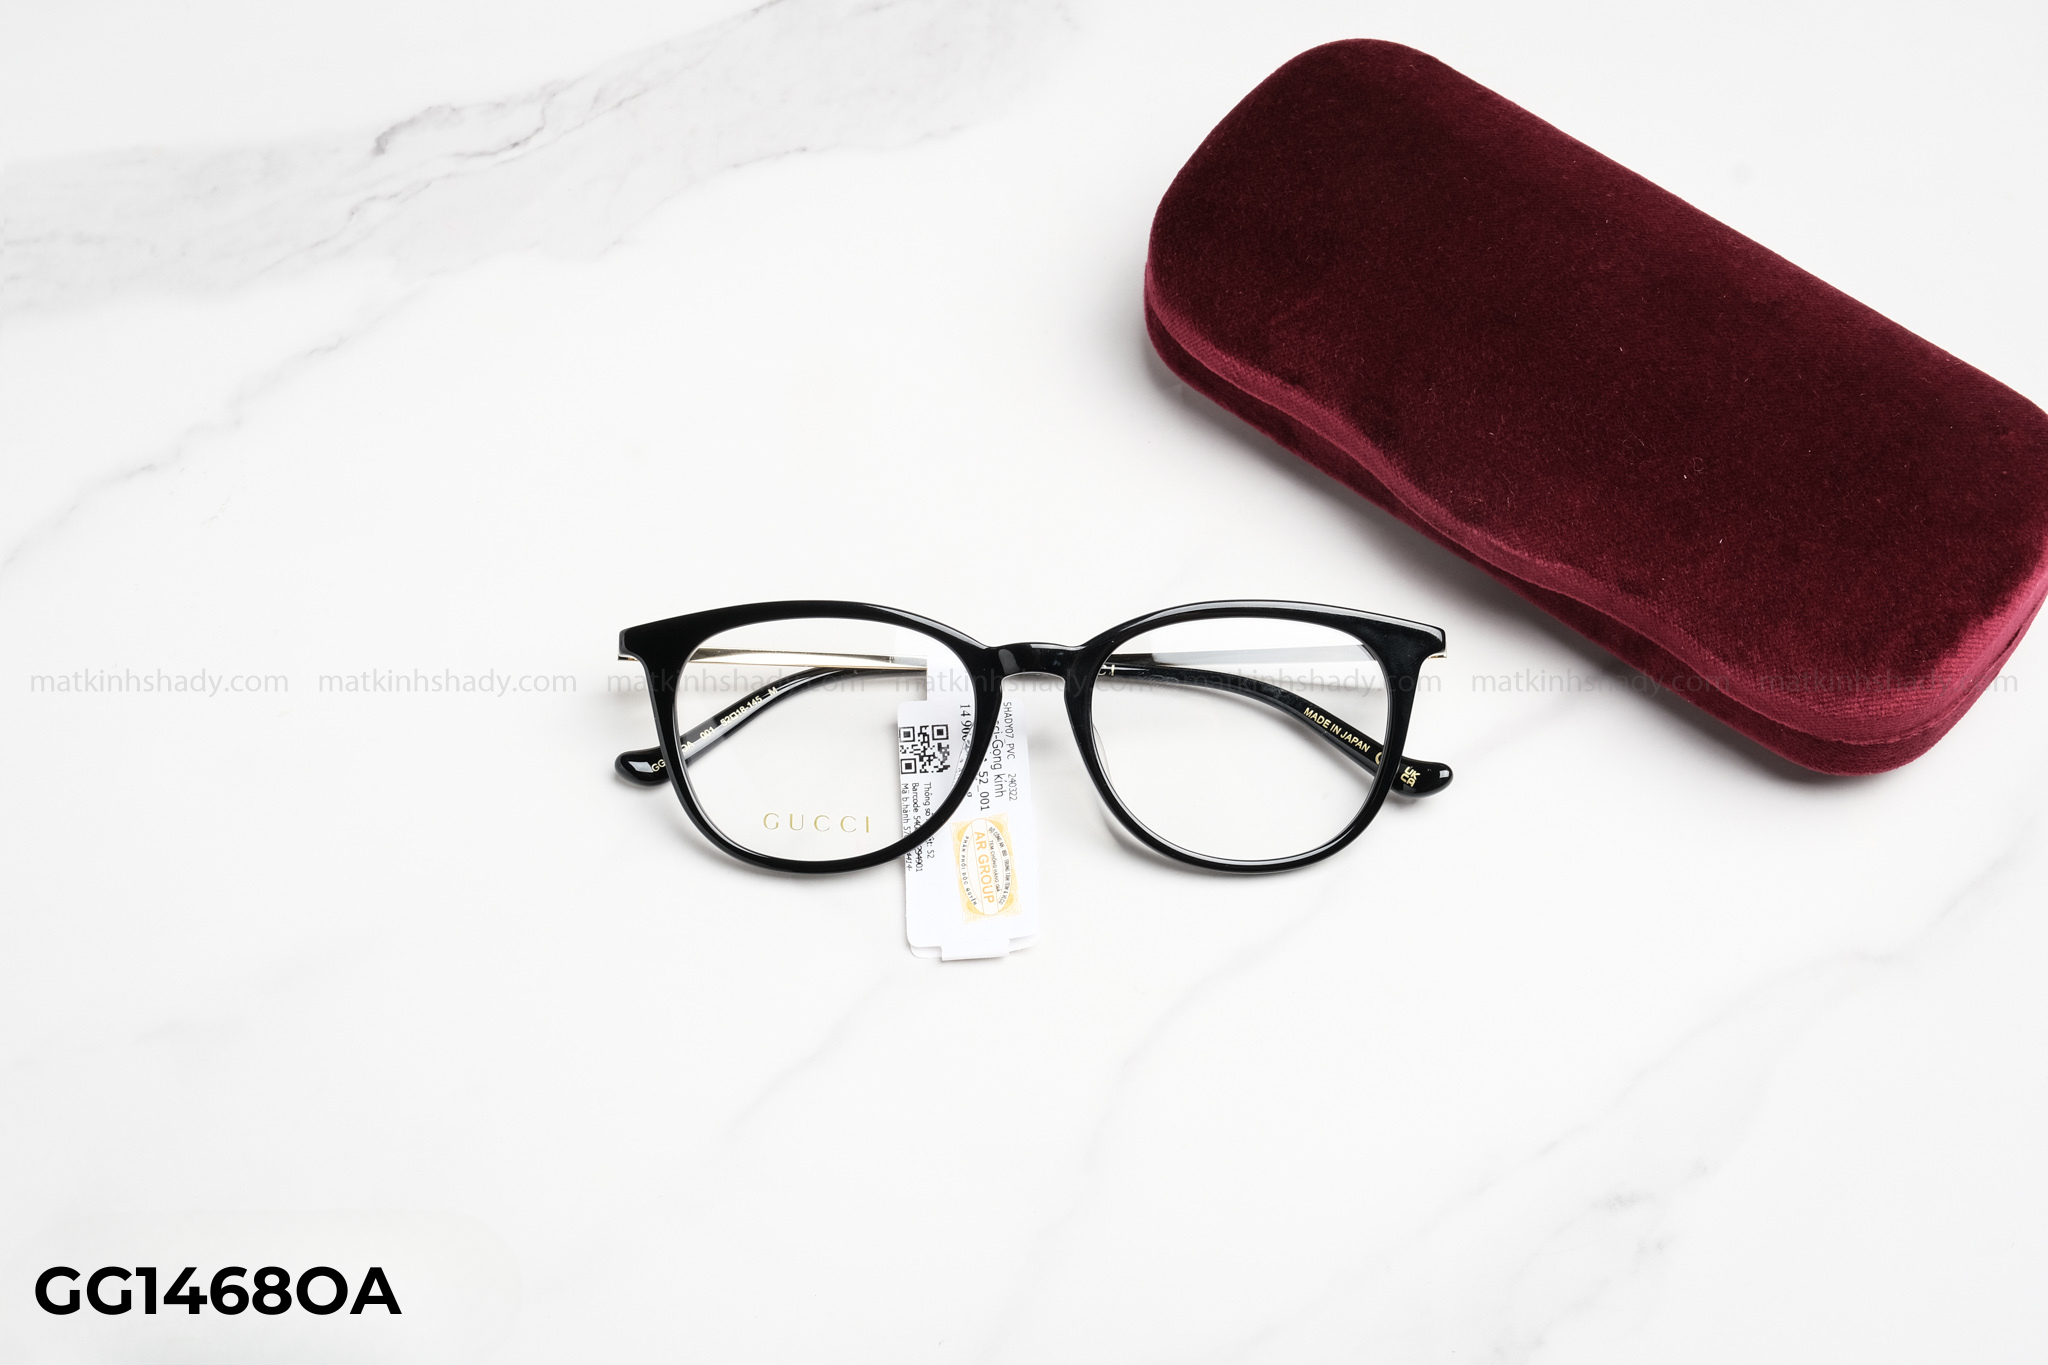  Gucci Eyewear - Glasses - GG1468OA 